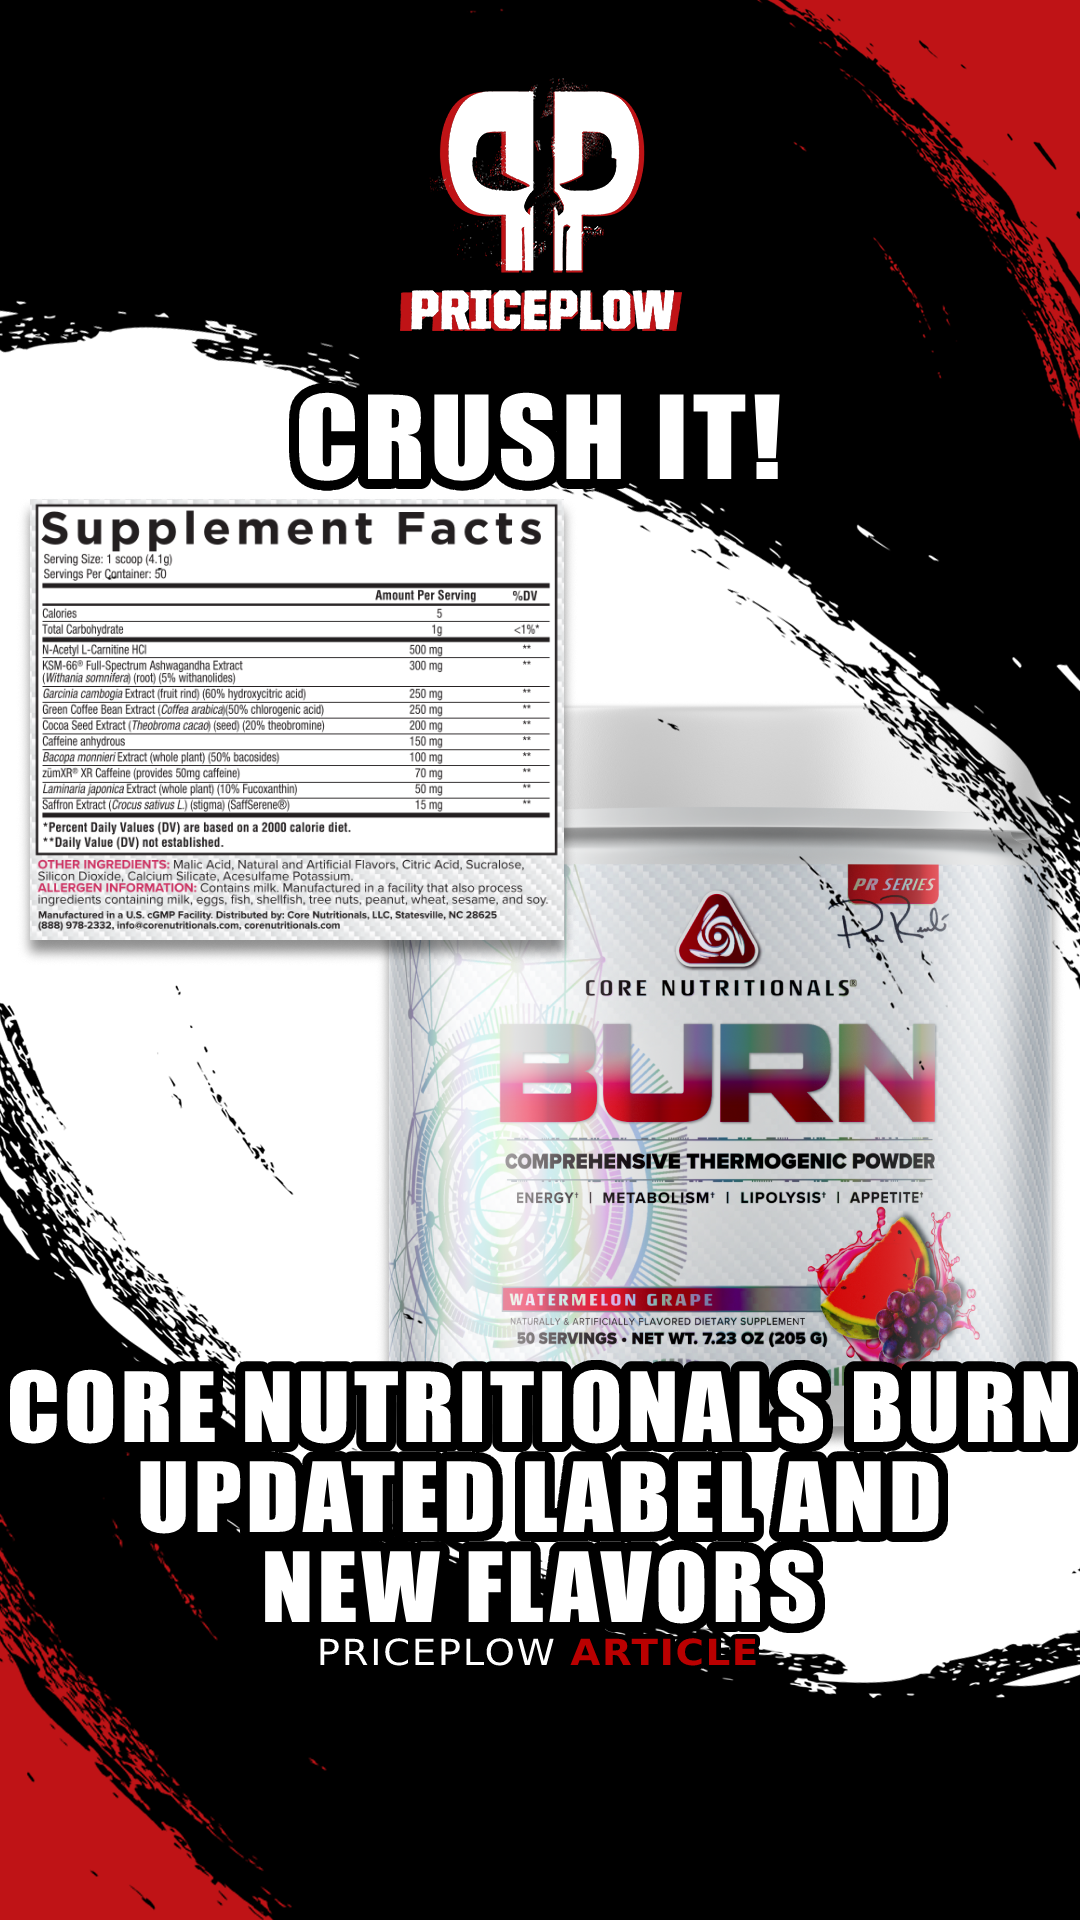 Core Nutritionals BURN